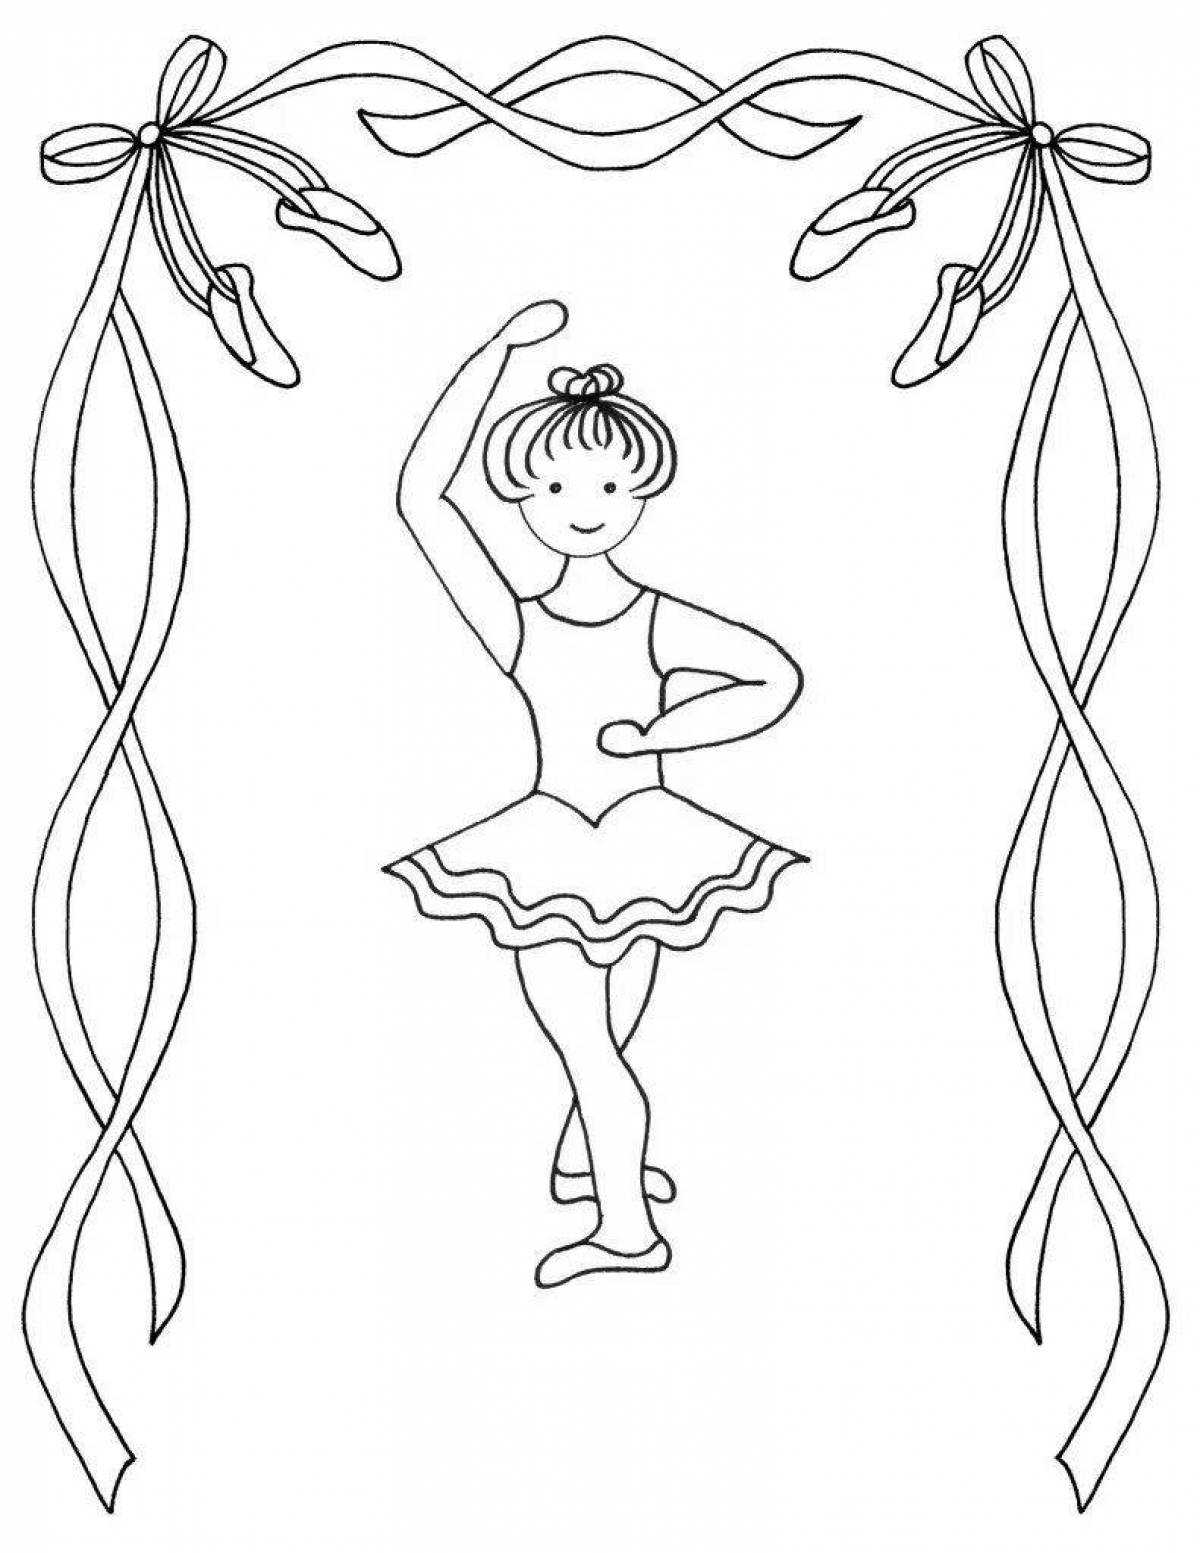 Красочная балетная раскраска для детей